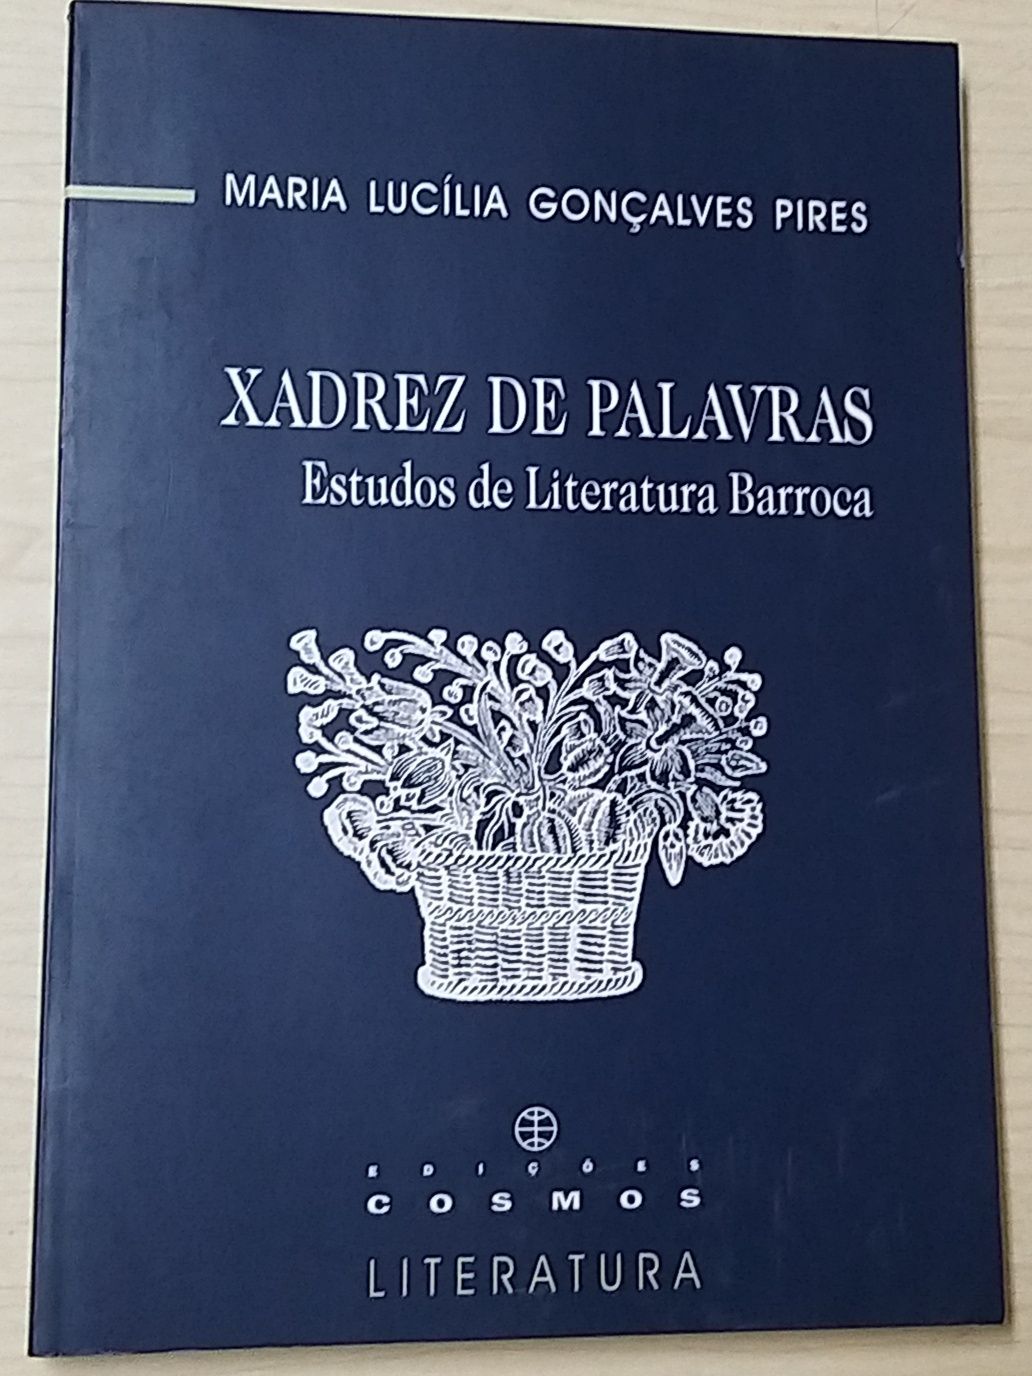 Xadrez de Palavras, Estudos de Literatura Barroca.